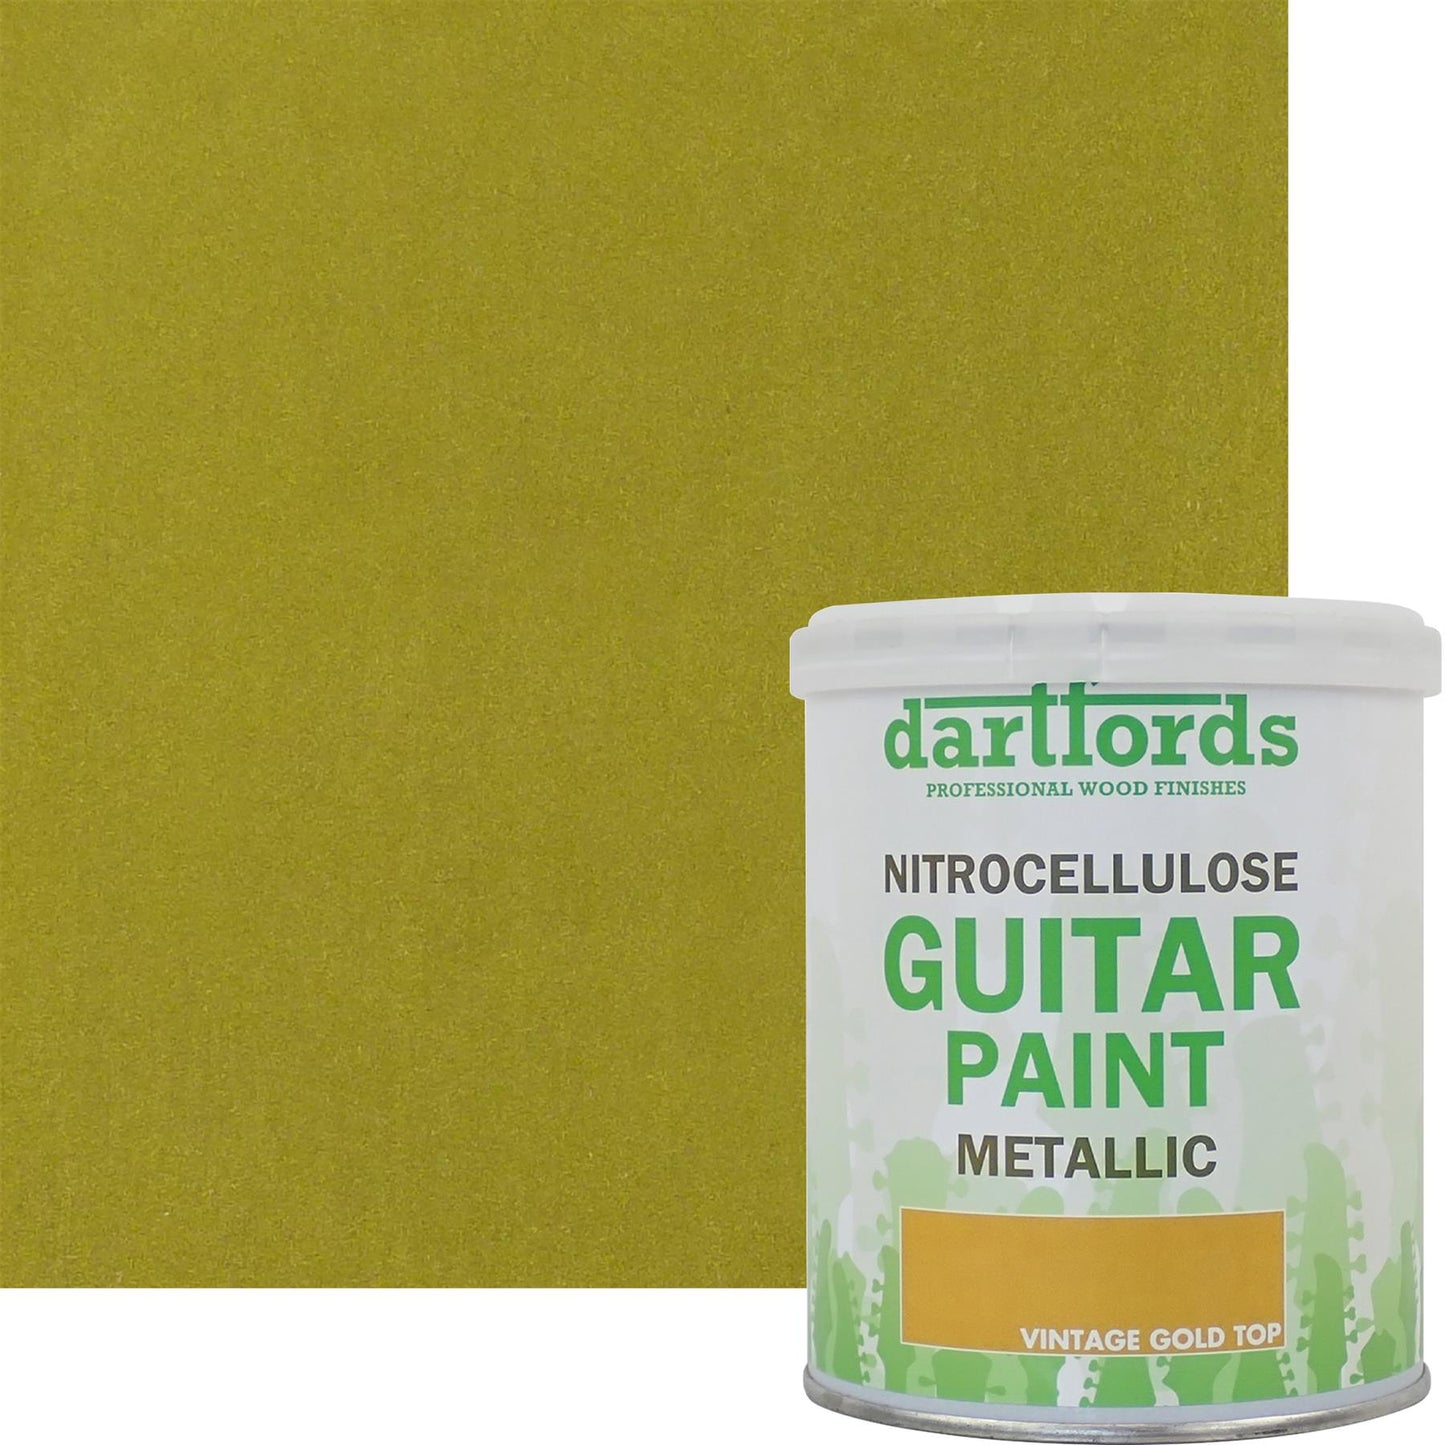 dartfords Vintage Gold Top Metallic Nitrocellulose Guitar Paint - 1 litre Tin